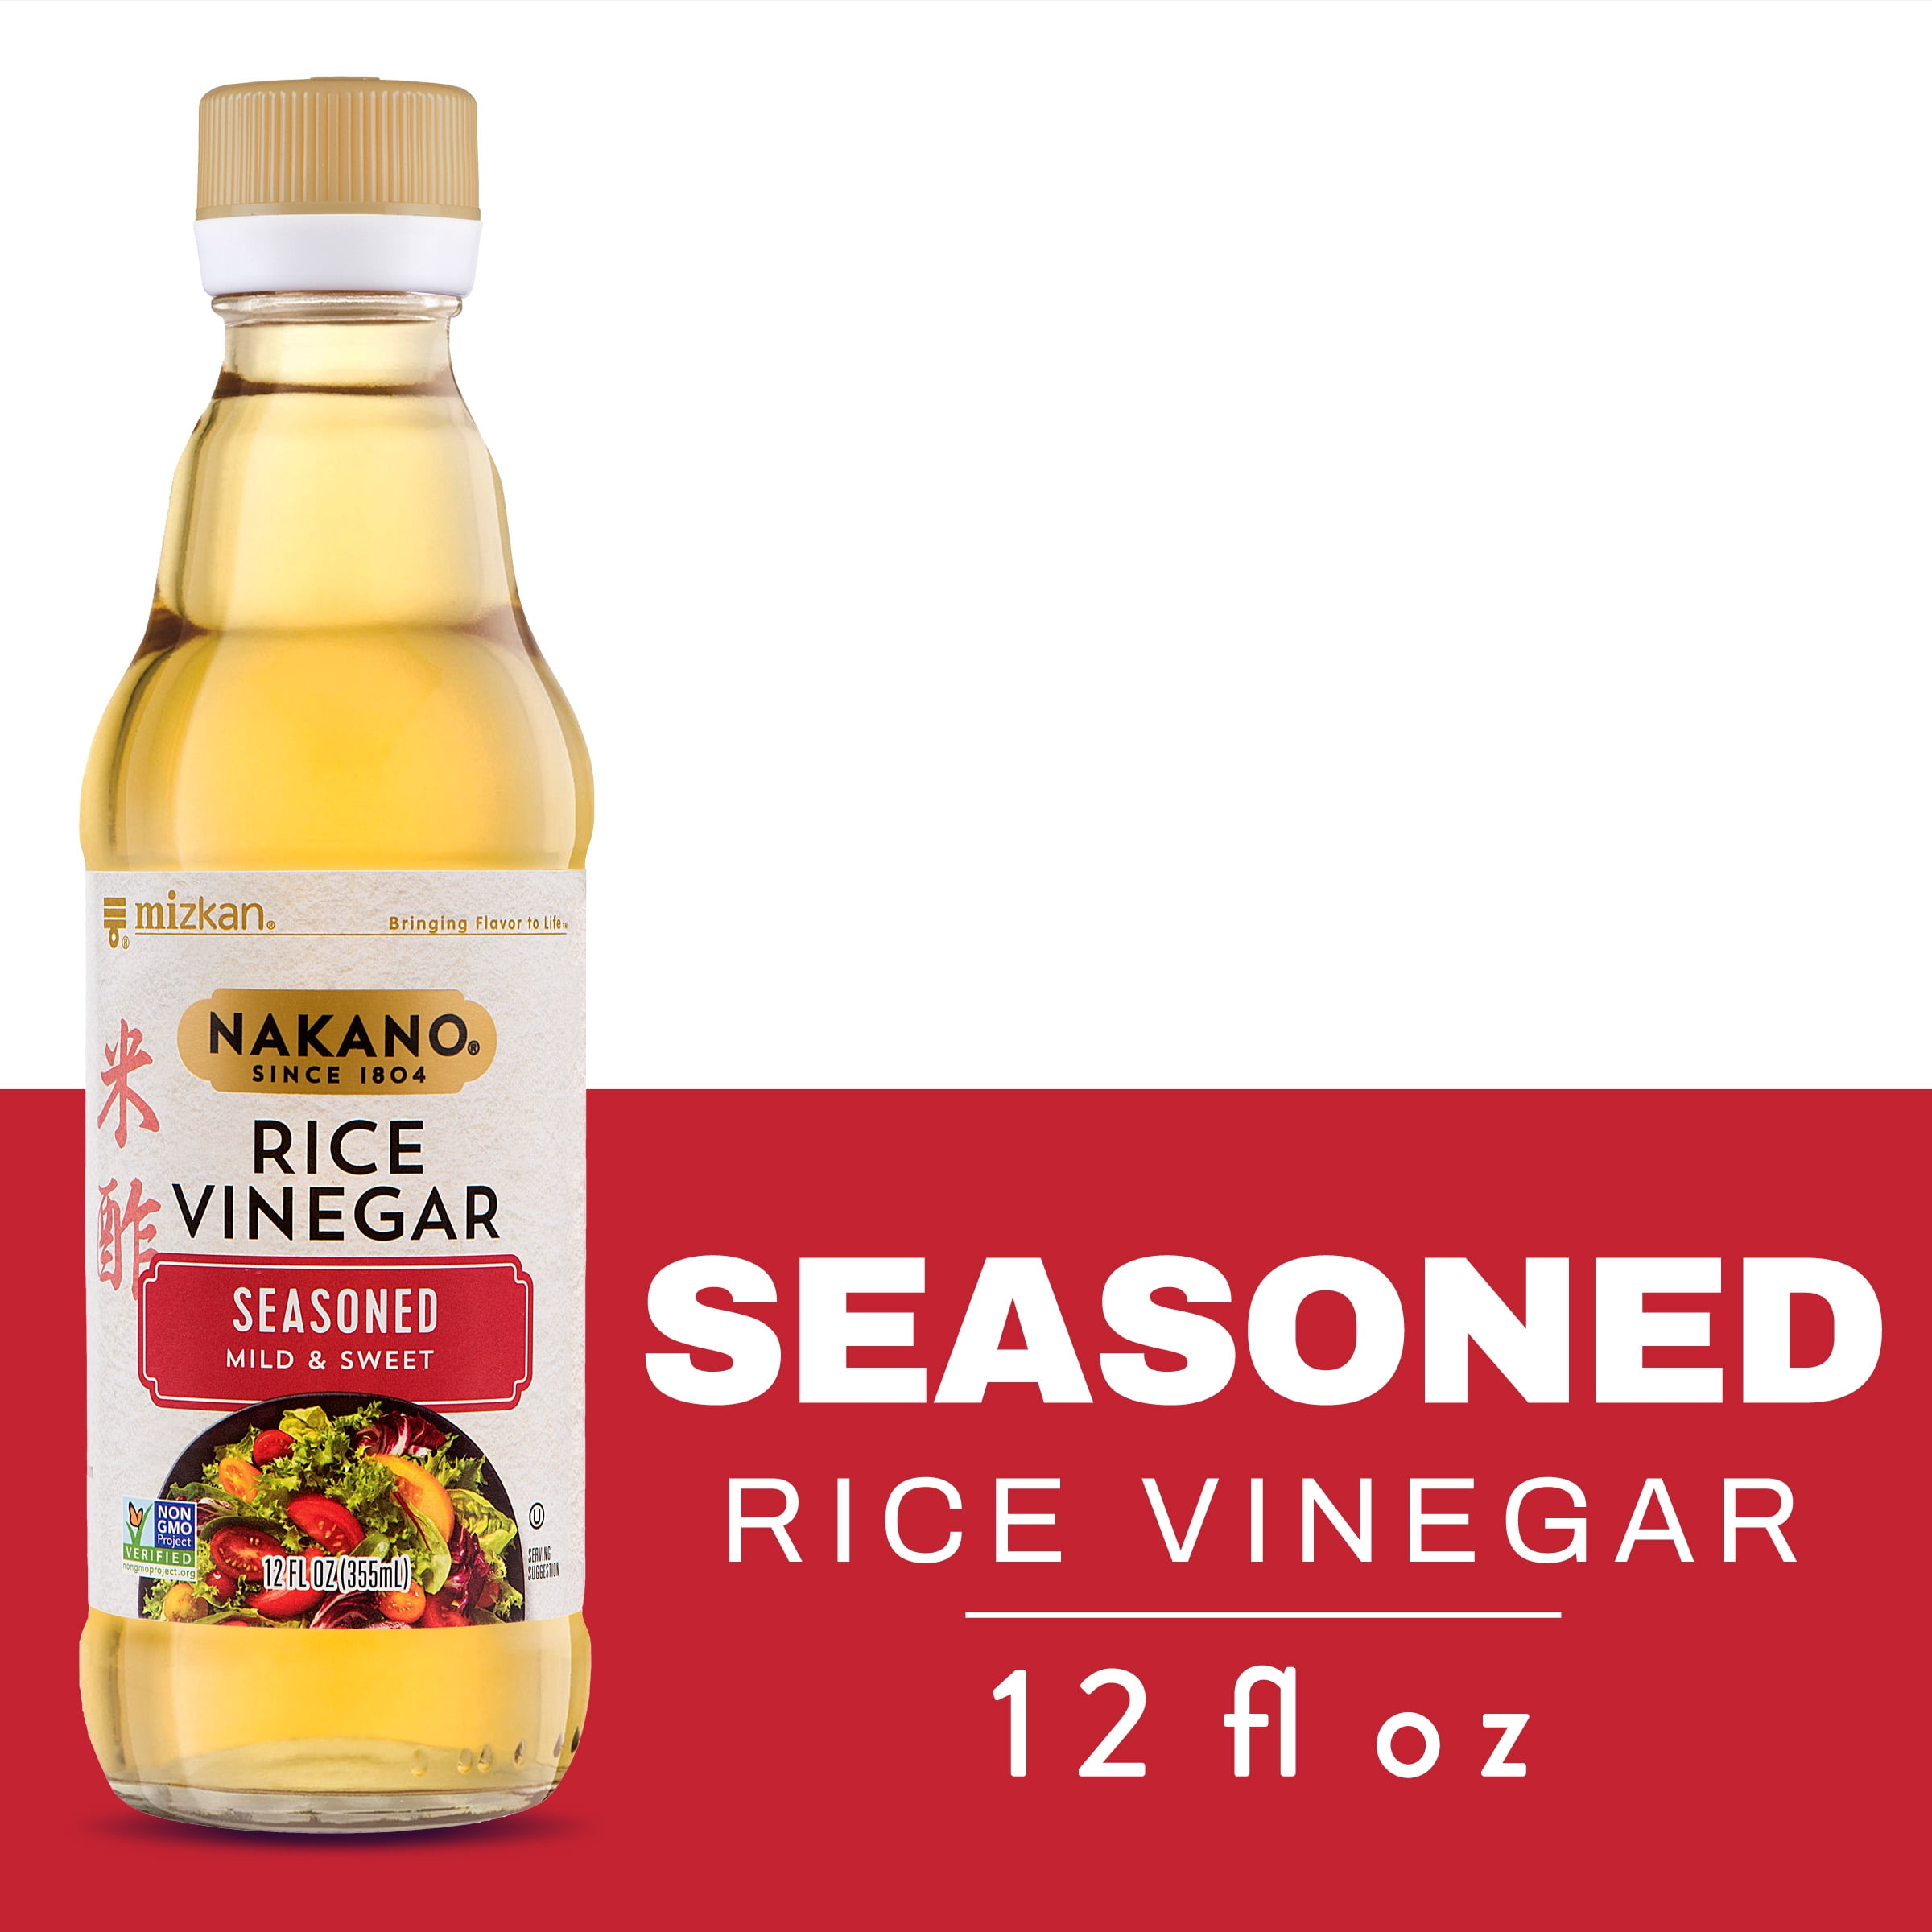 Nakano Seasoned Rice Vinegar, Seasoned Vinegar with a Sweet and Mild Flavor for Sauteing, Baking and Marinades, 12 FL OZ